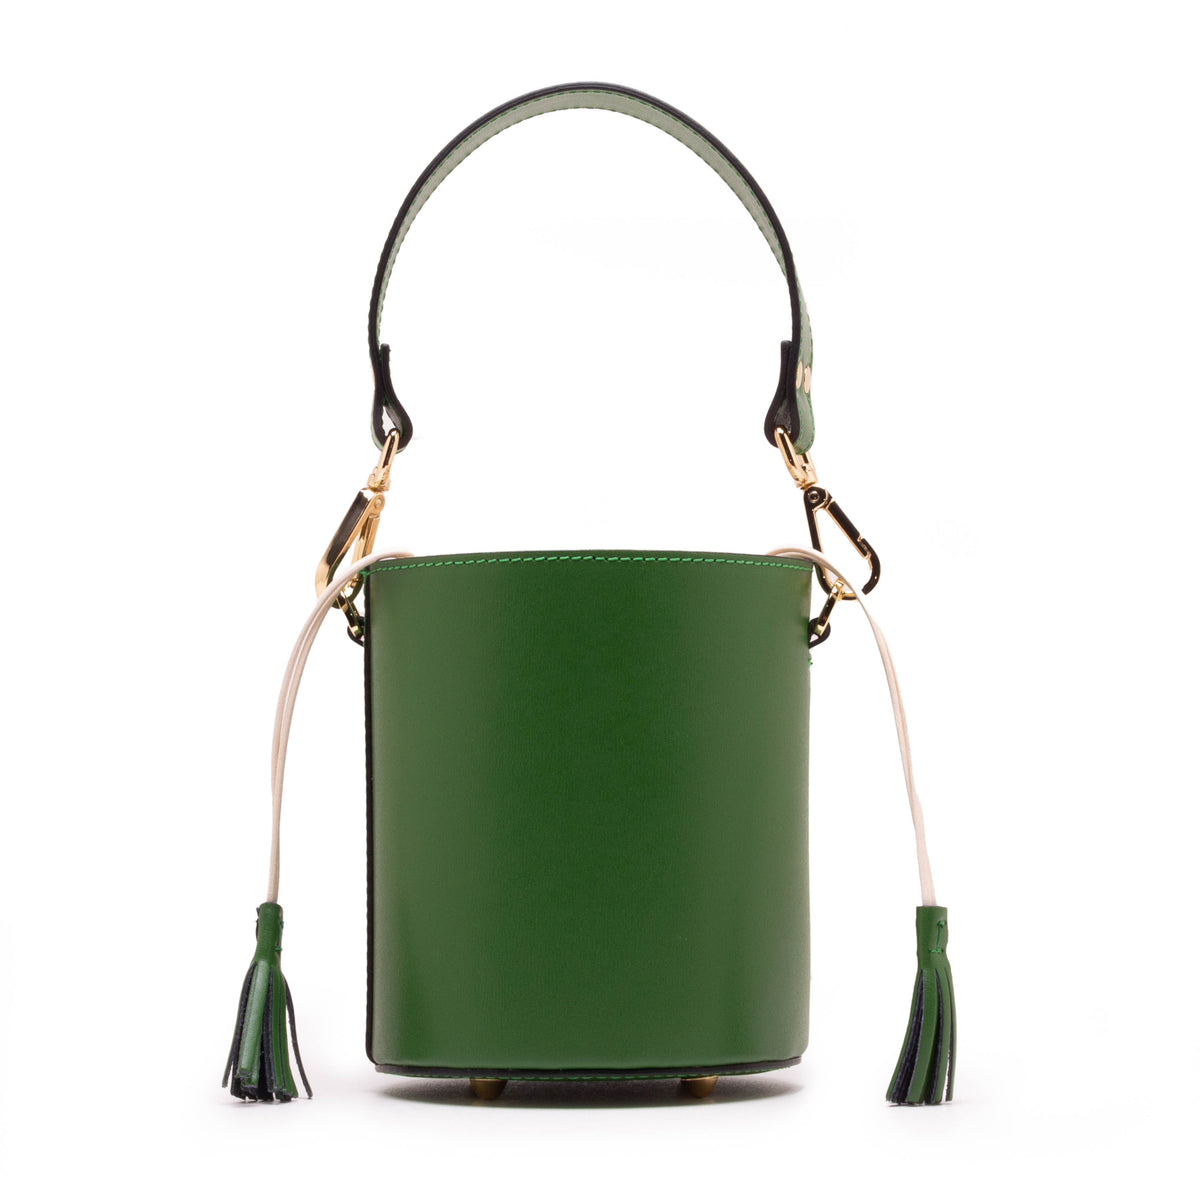 Matilda Bag in Green Glossy Leather